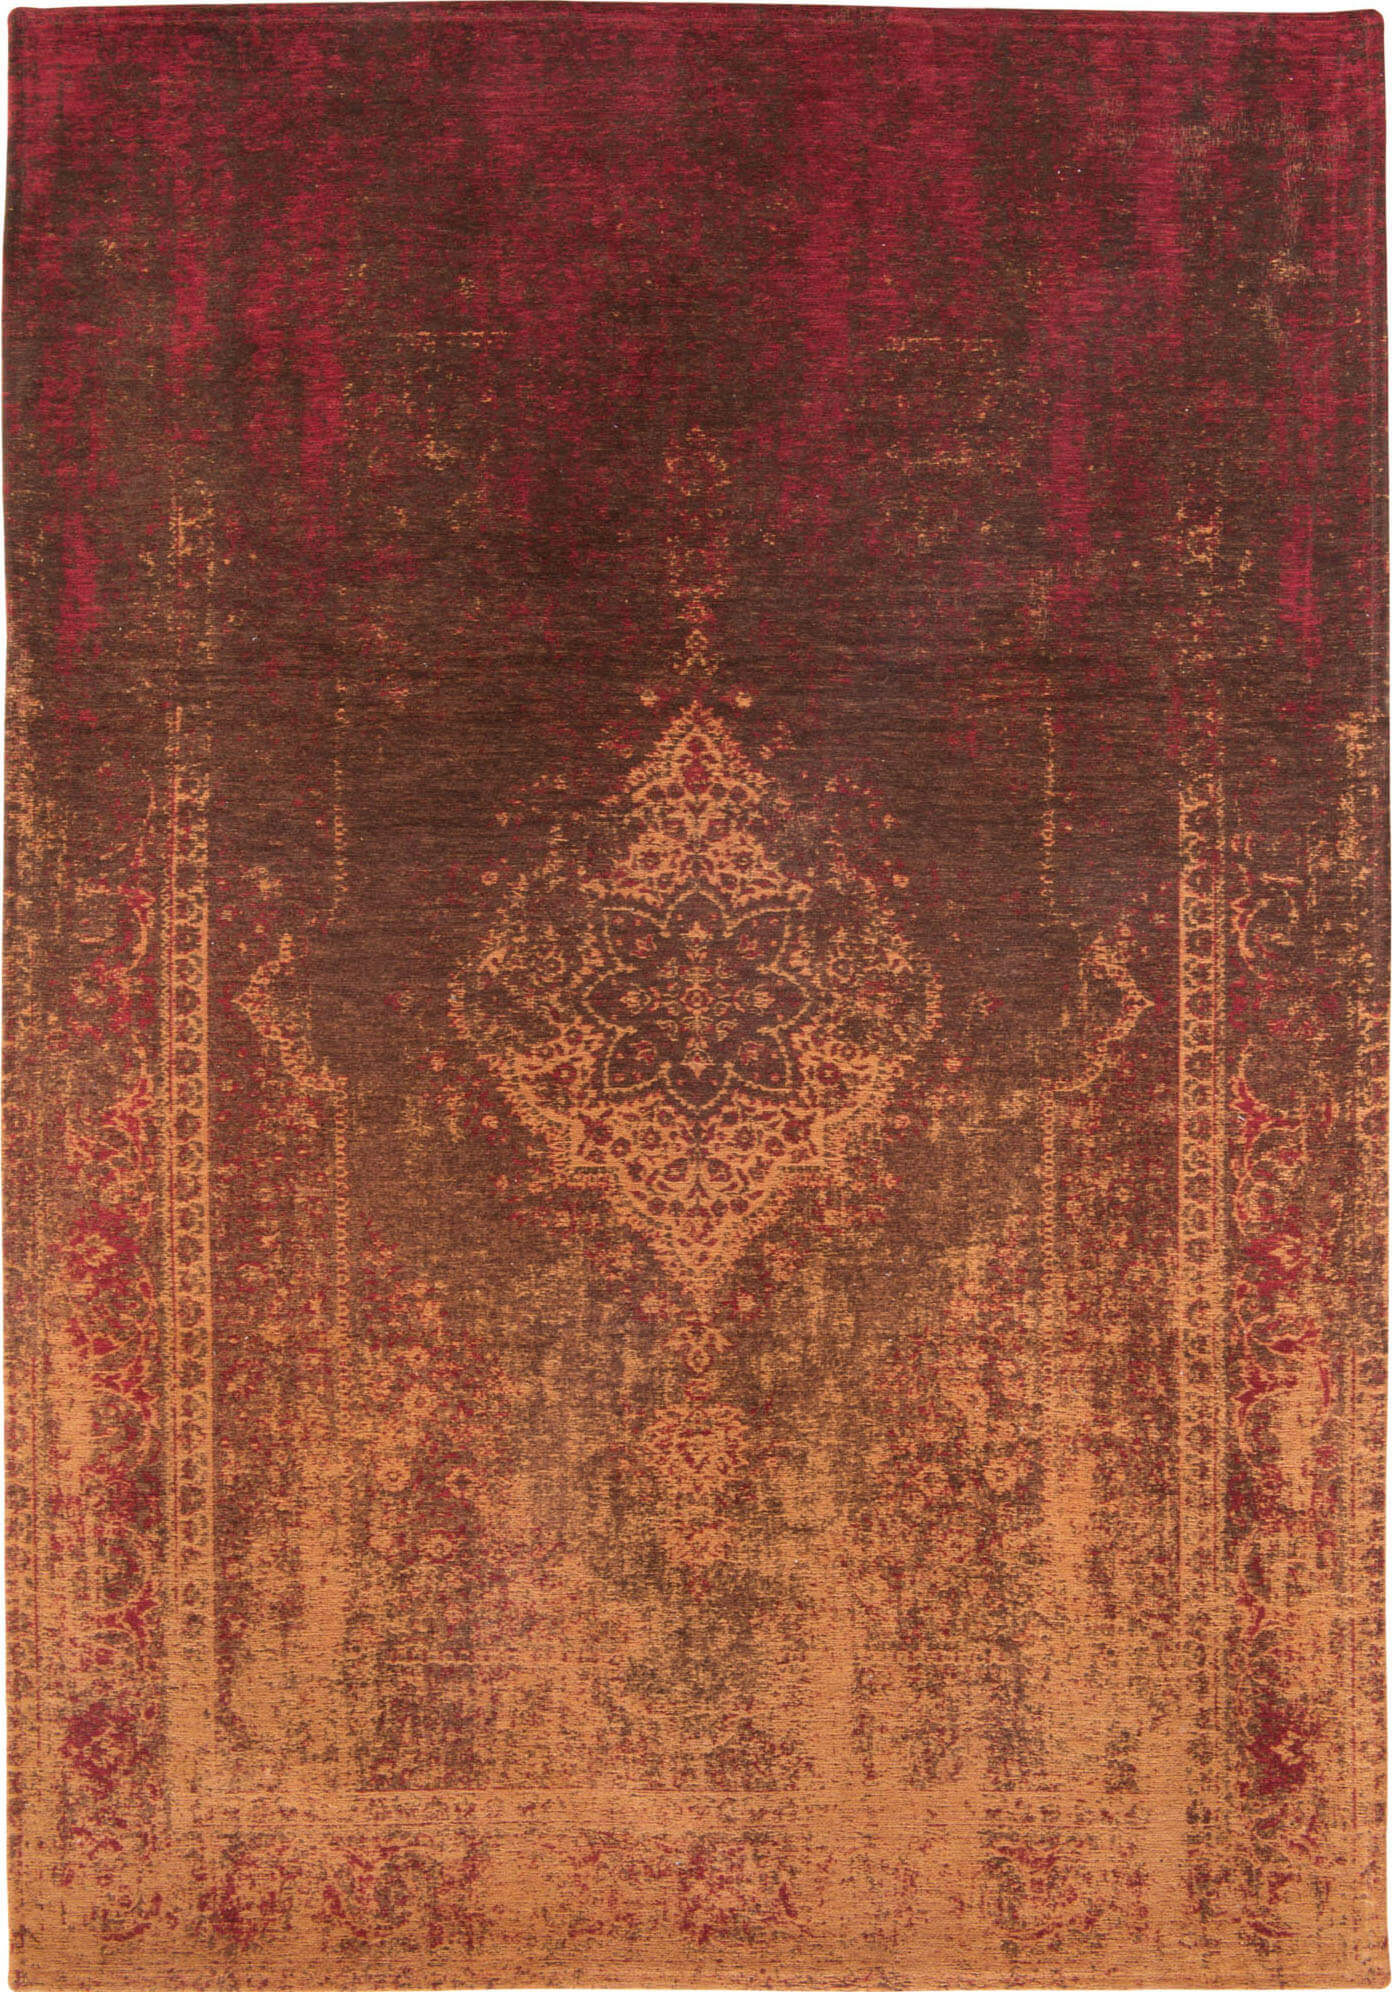 Persian Vintage Style Rug Mango Brown ☞ Size: 200 x 280 cm